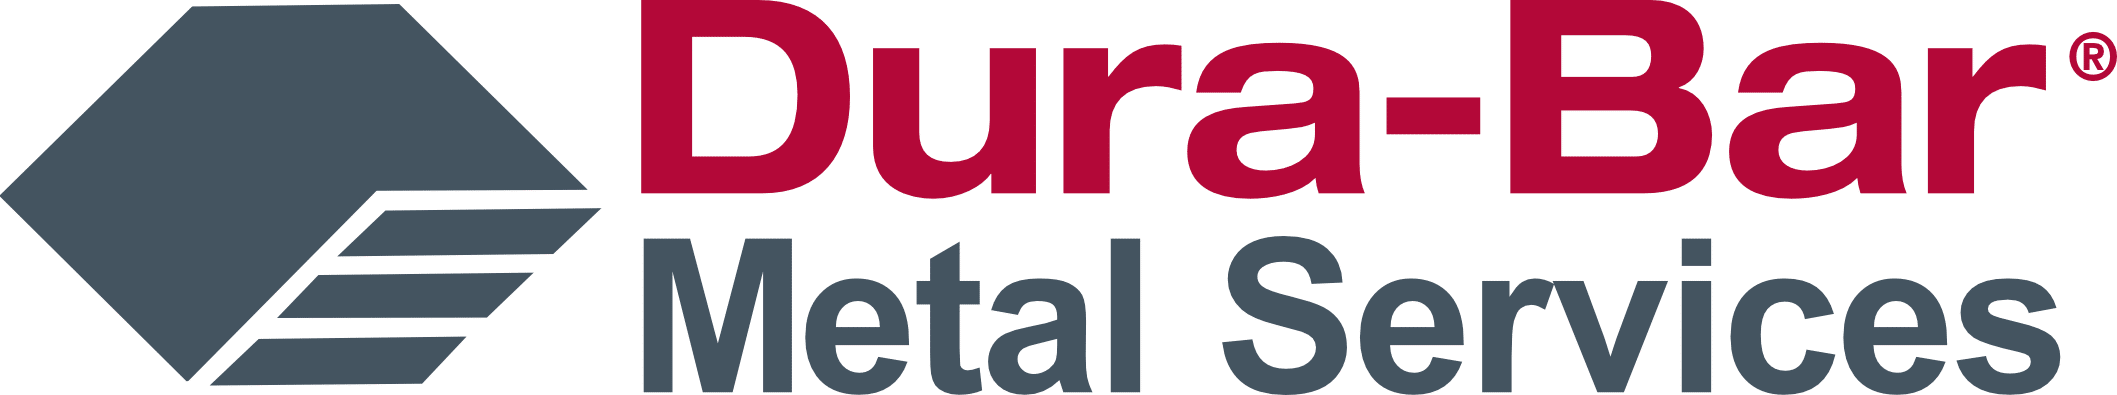 Dura-Bar Metal Services Primary Logo